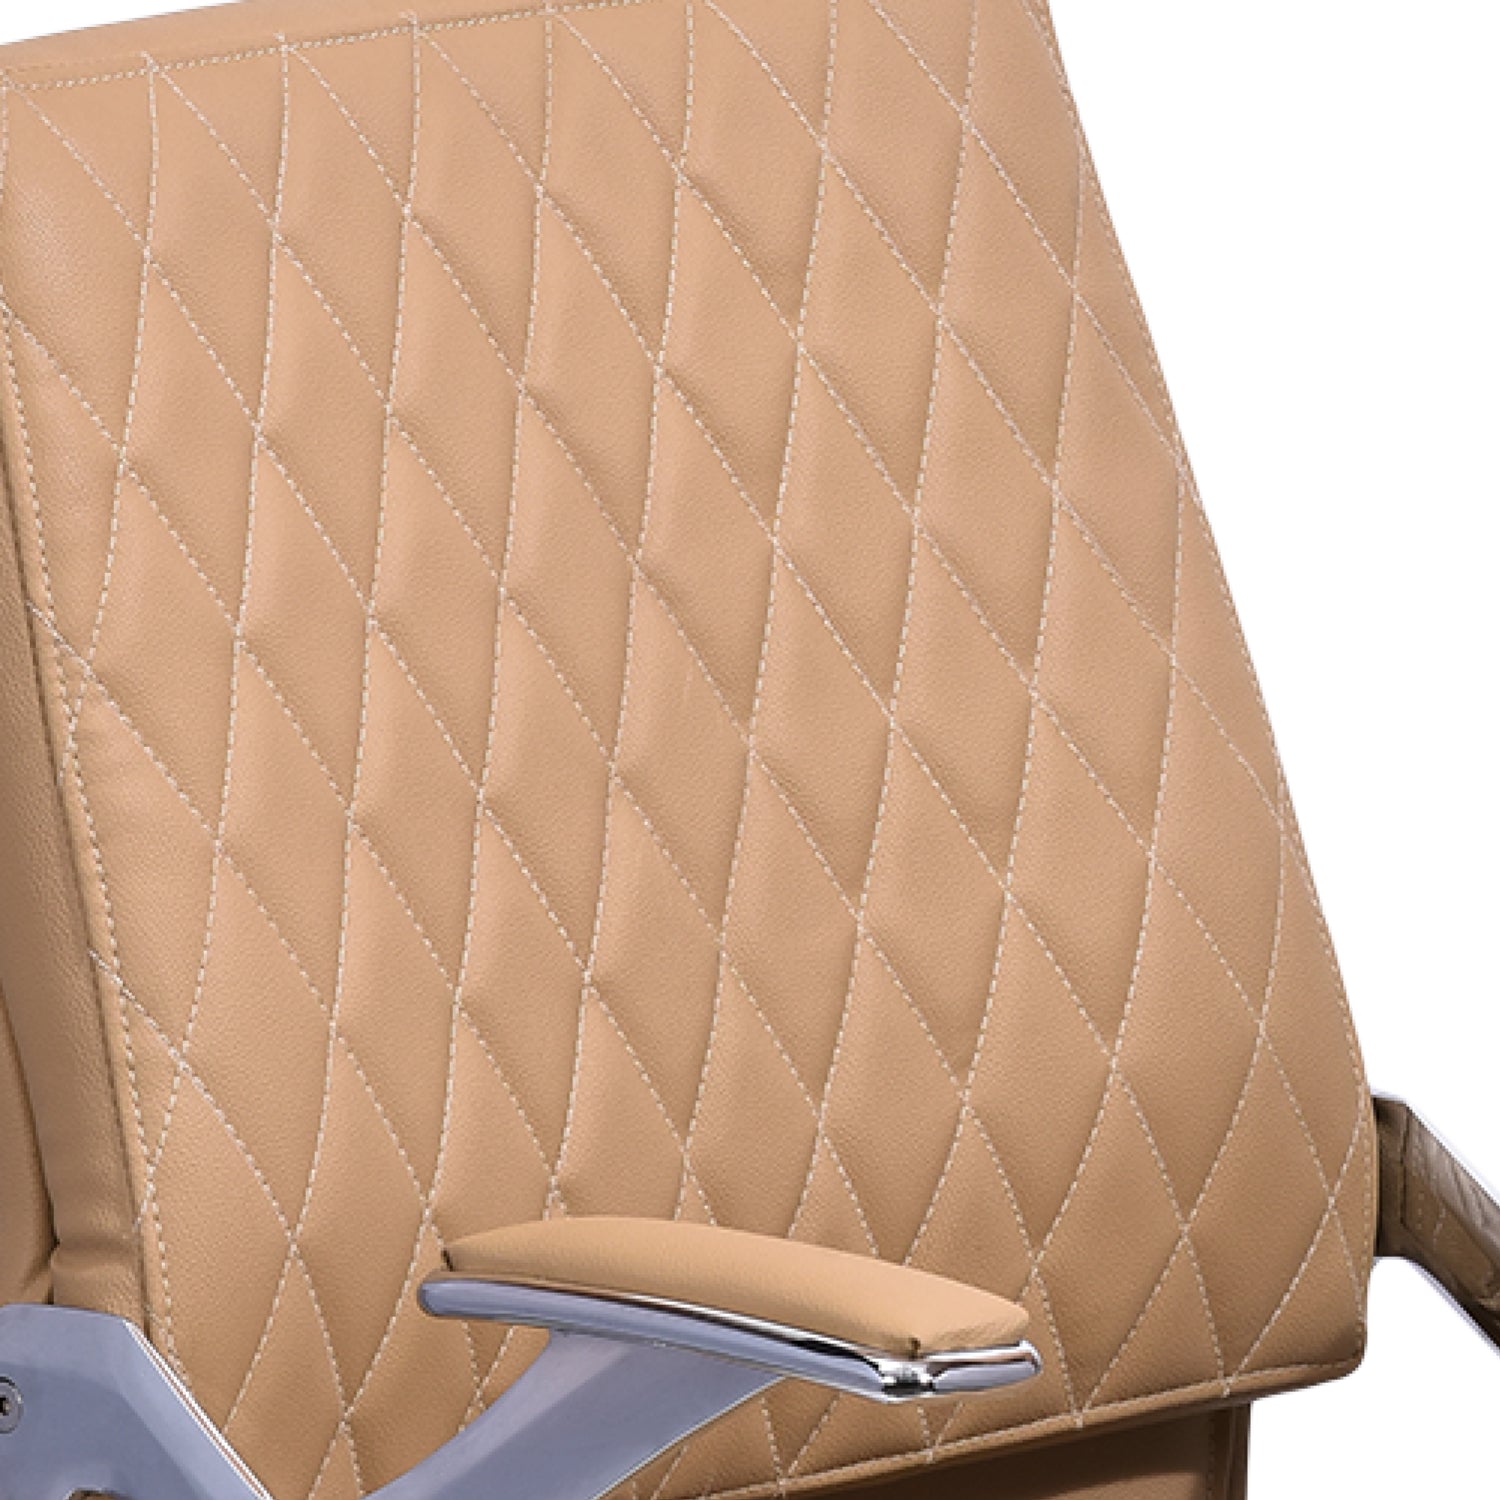 ZFD1012 Medium Back Chair by Zorin in Beige Color Zorin